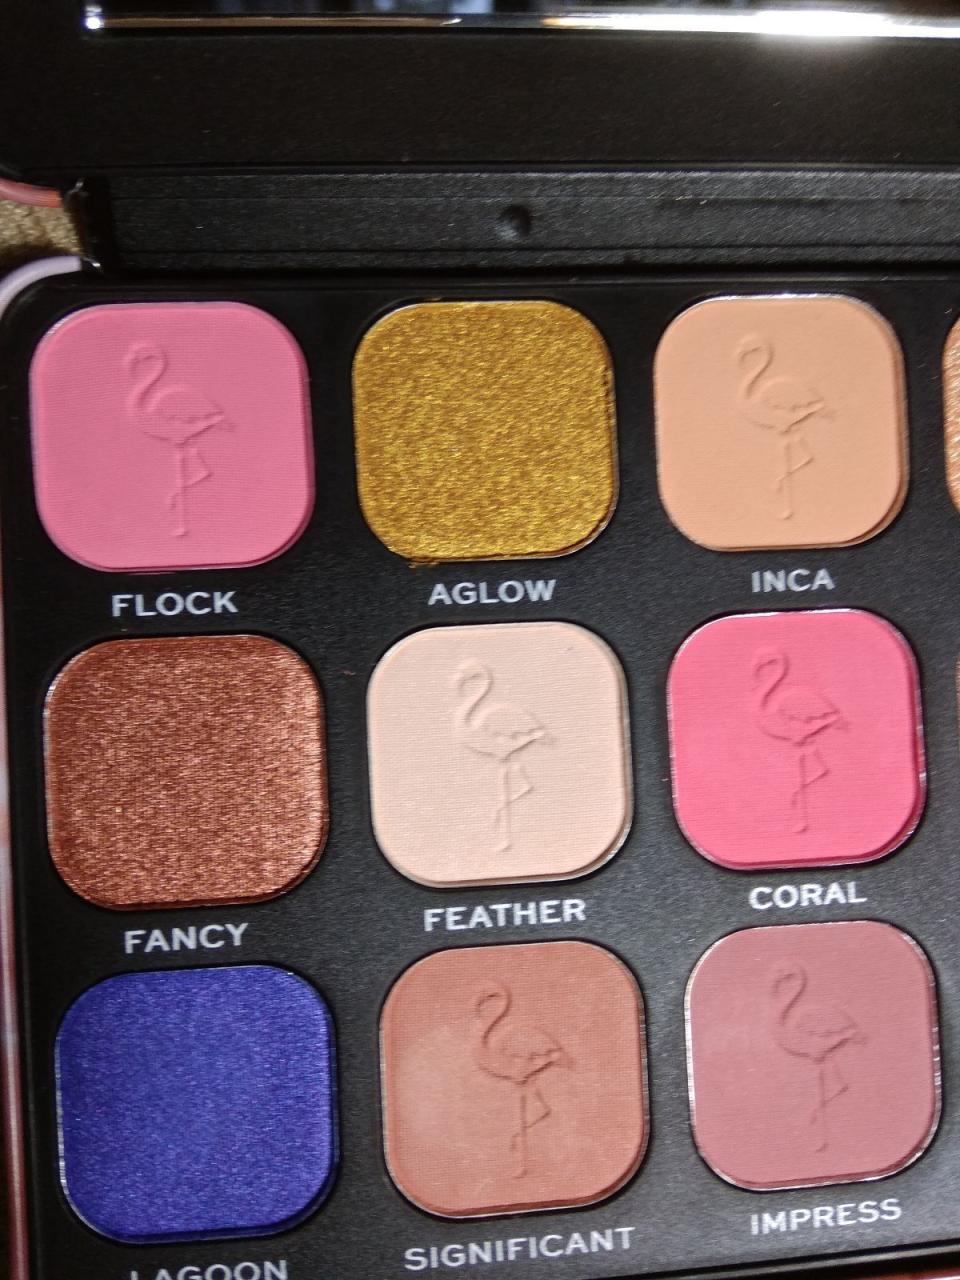 Отзыв на товар: Палетка теней для век Forever Flawless Flamboyance Flamingo Eyeshadow Palette. Makeup Revolution. Вид 4 от 21.10.2022 